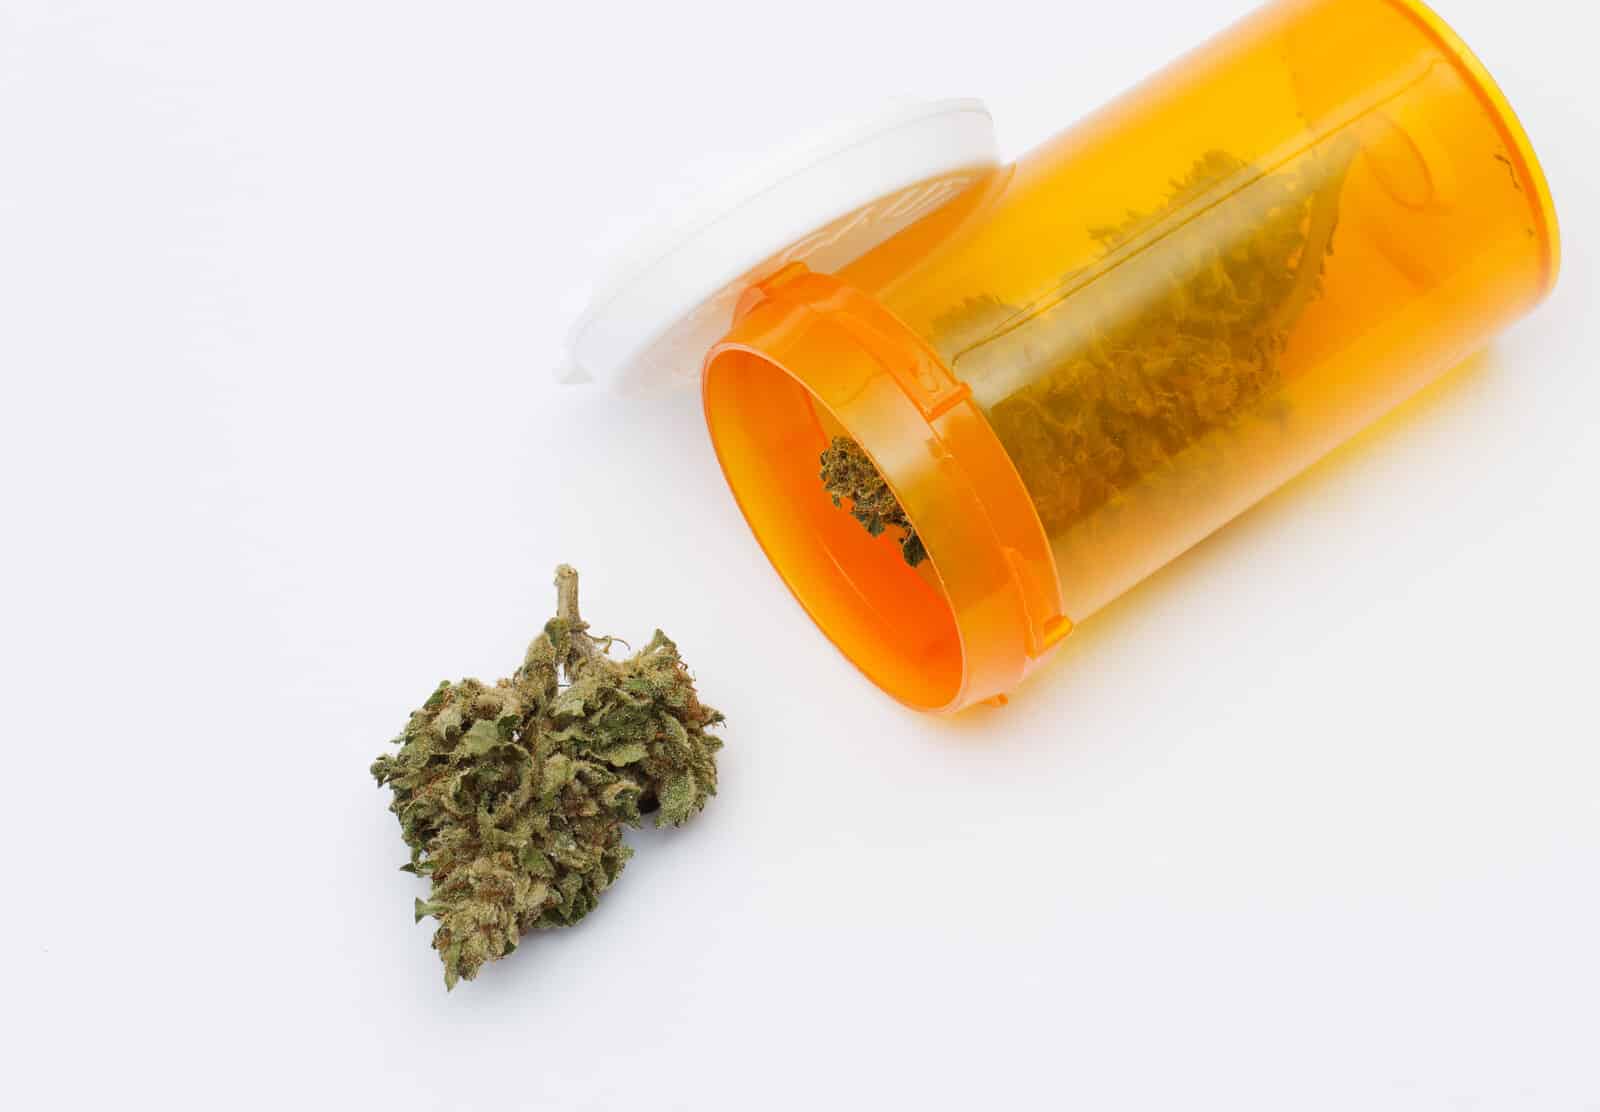 Kentucky lawmaker optimistic about medical cannabis bill